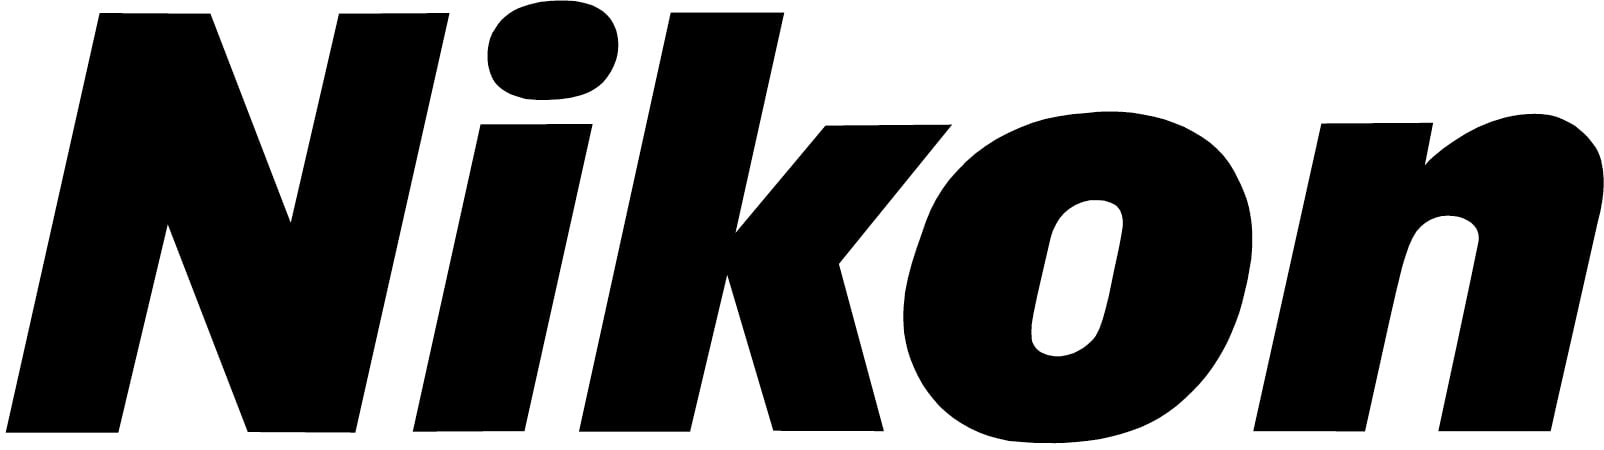 logo-nikon